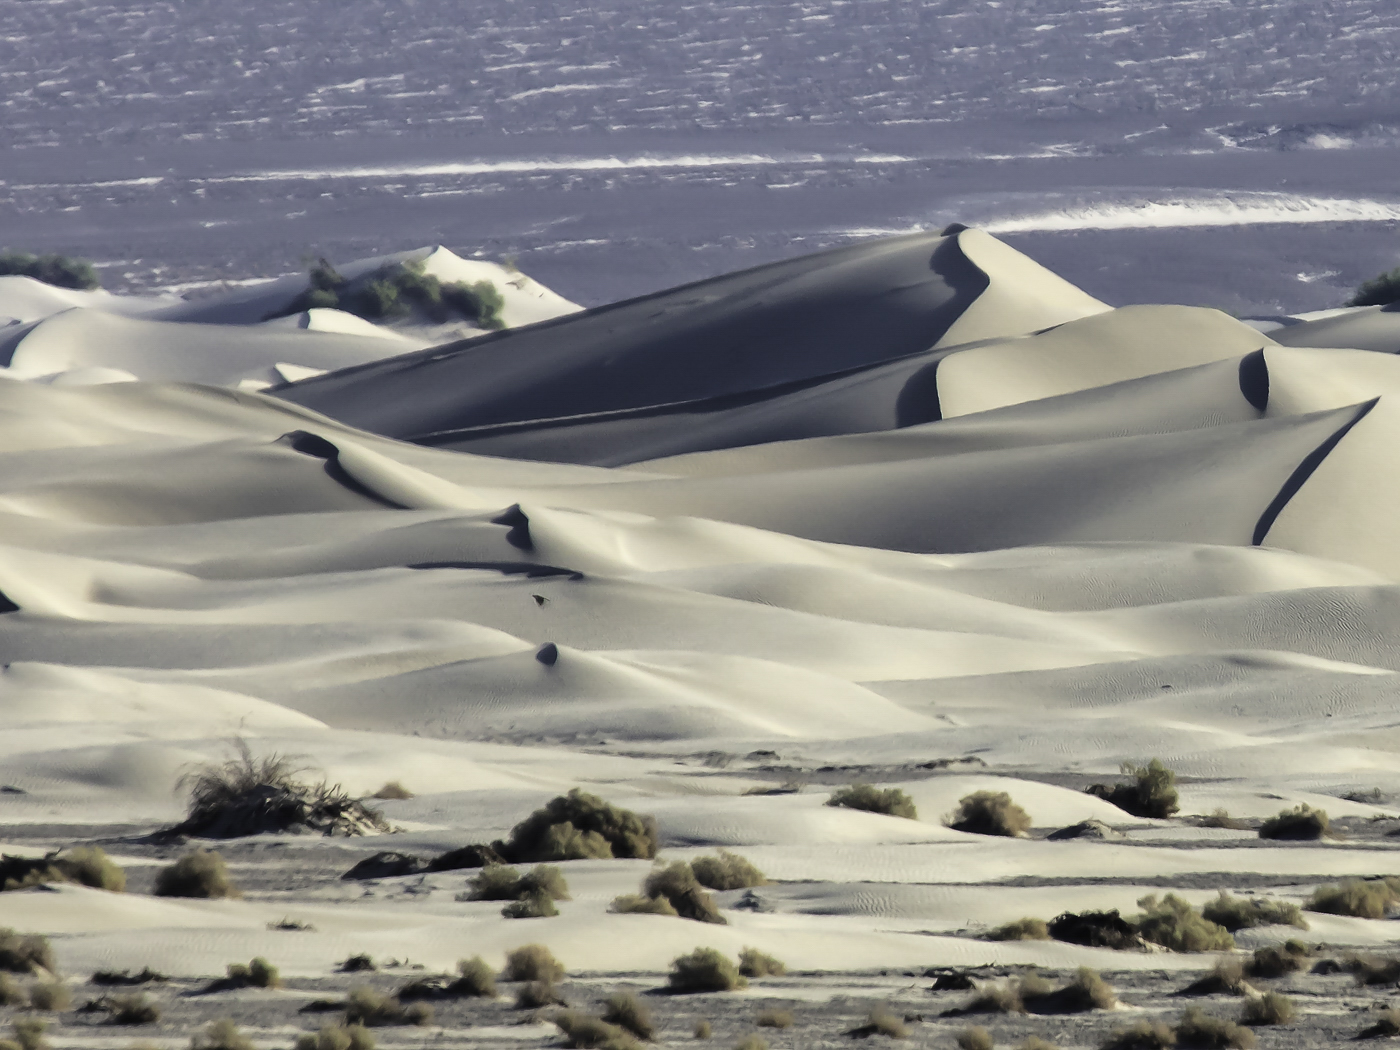 Mesquite Flat Sand Dune